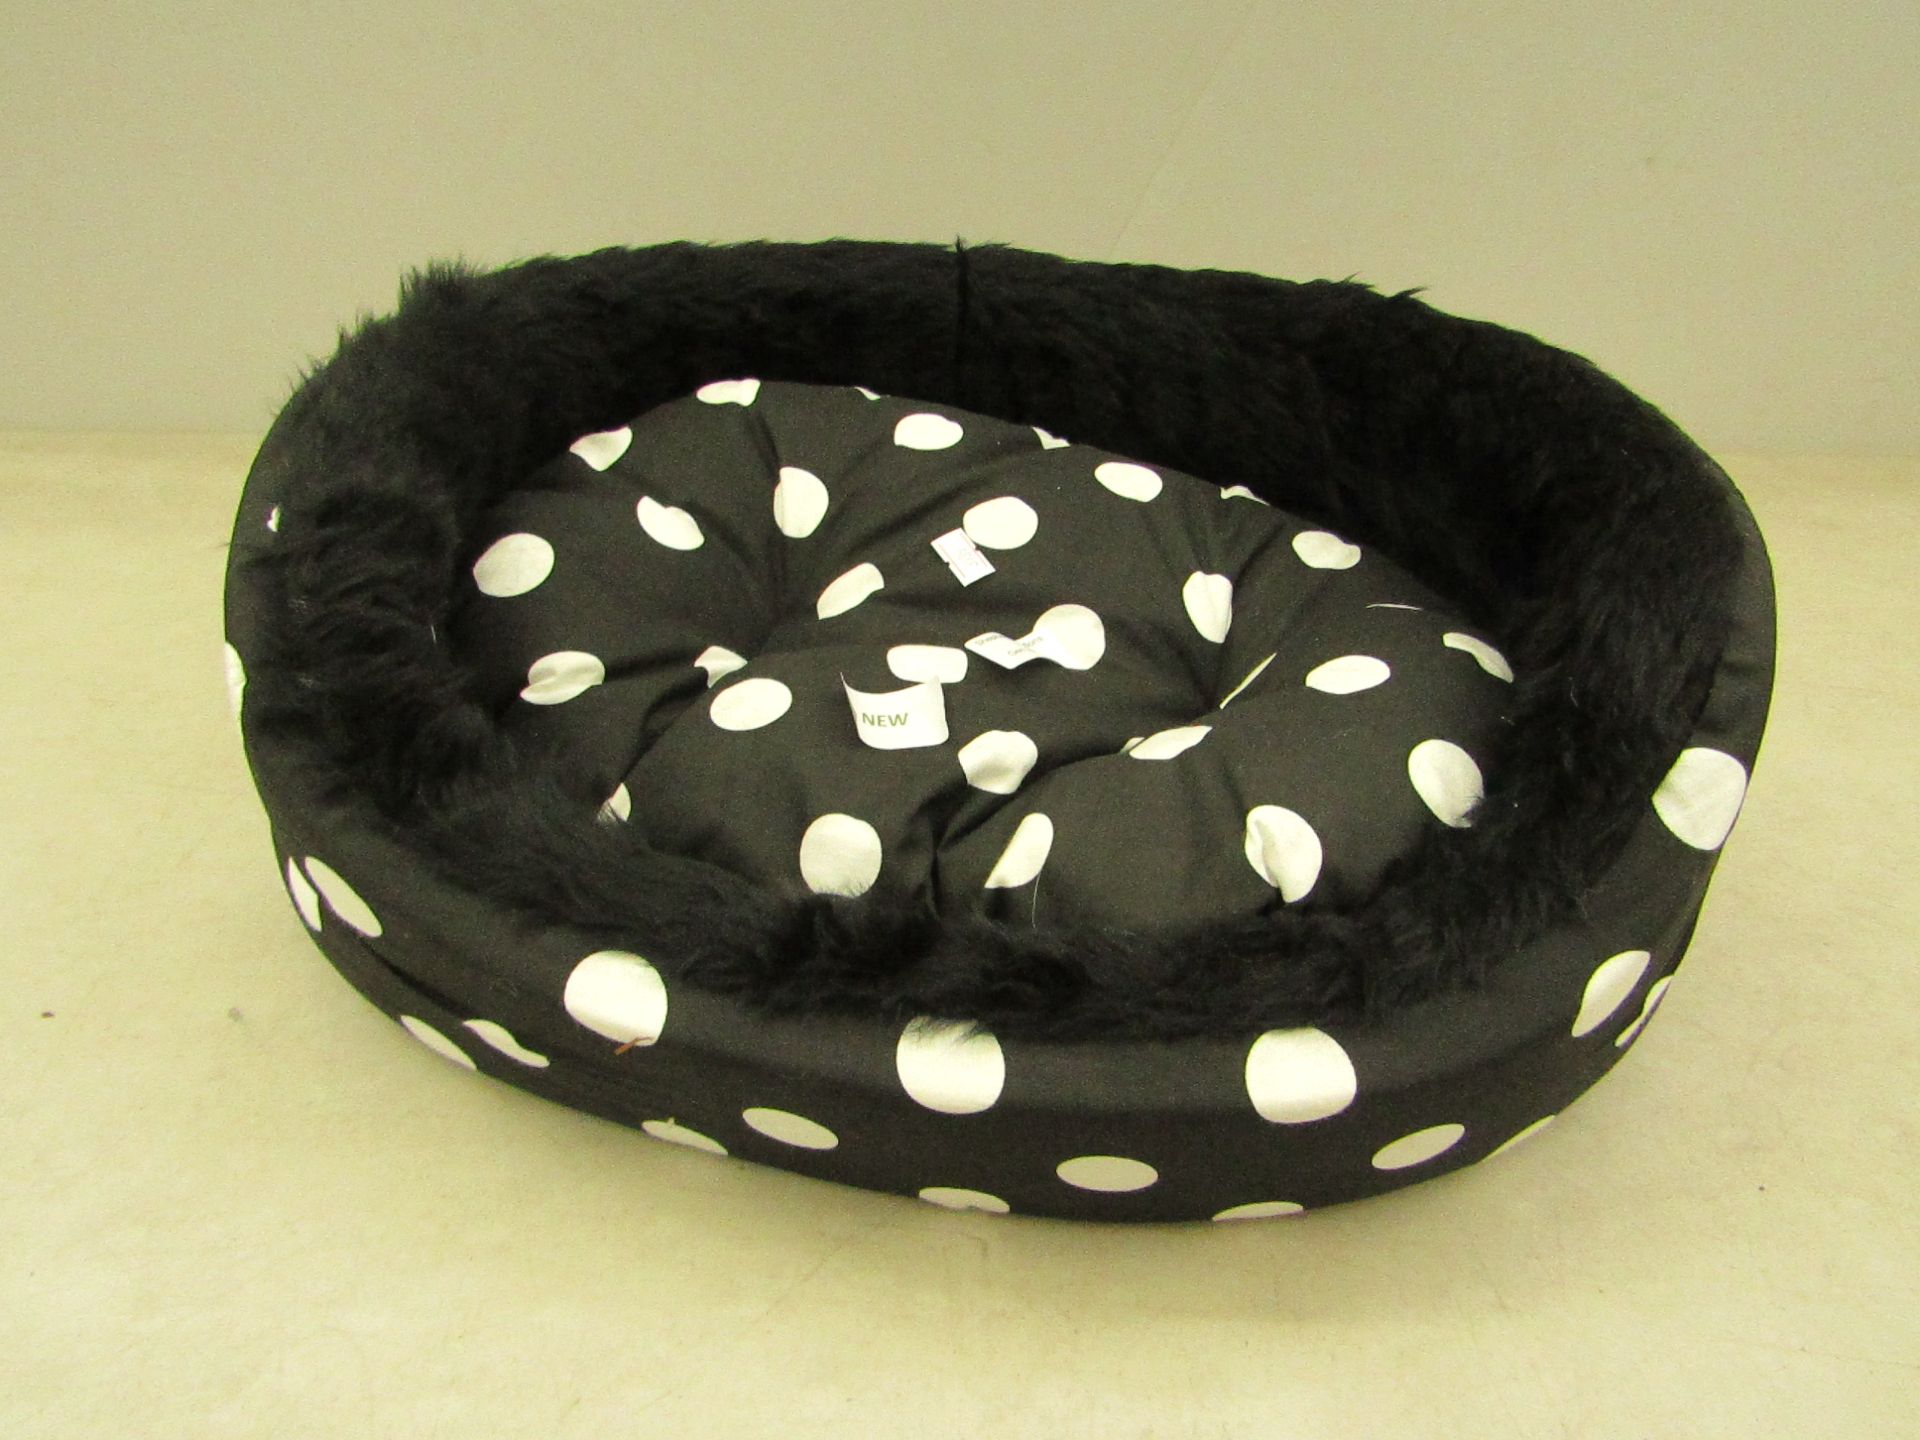 black with white polka dot design cat bed, new